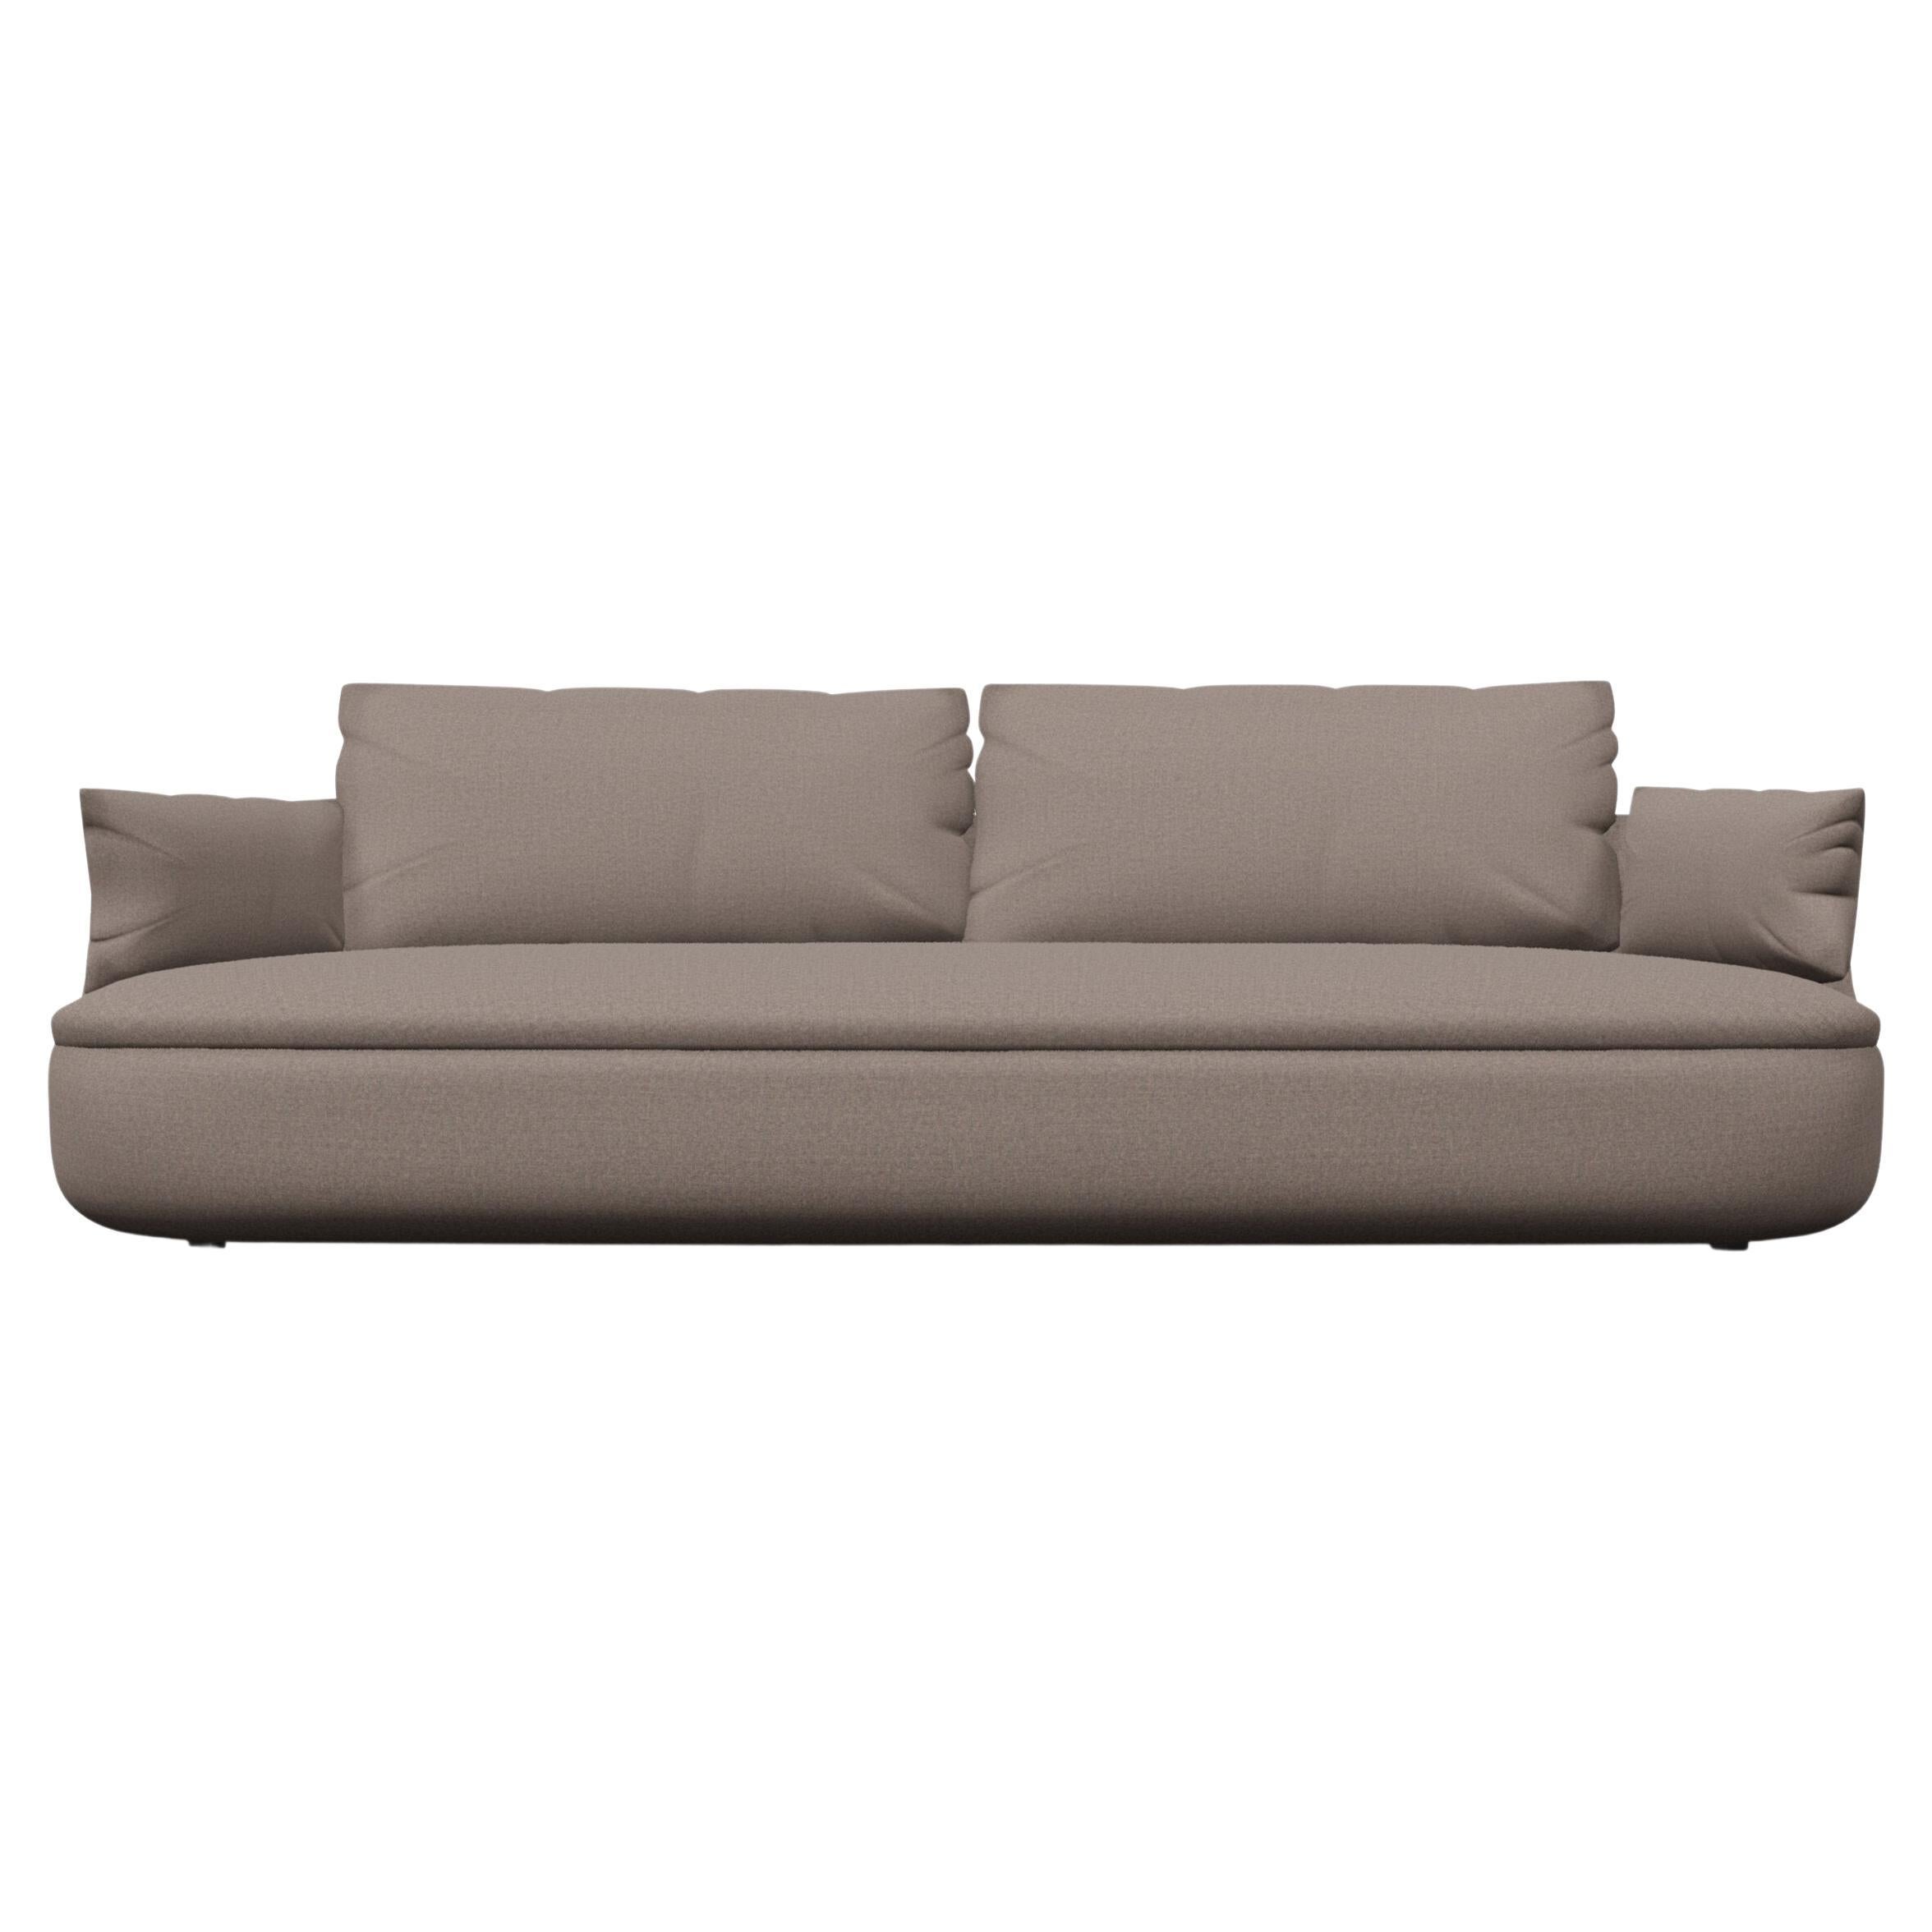 Moooi Bart Basic Sofa in Justo, Sten Beige Upholstery For Sale